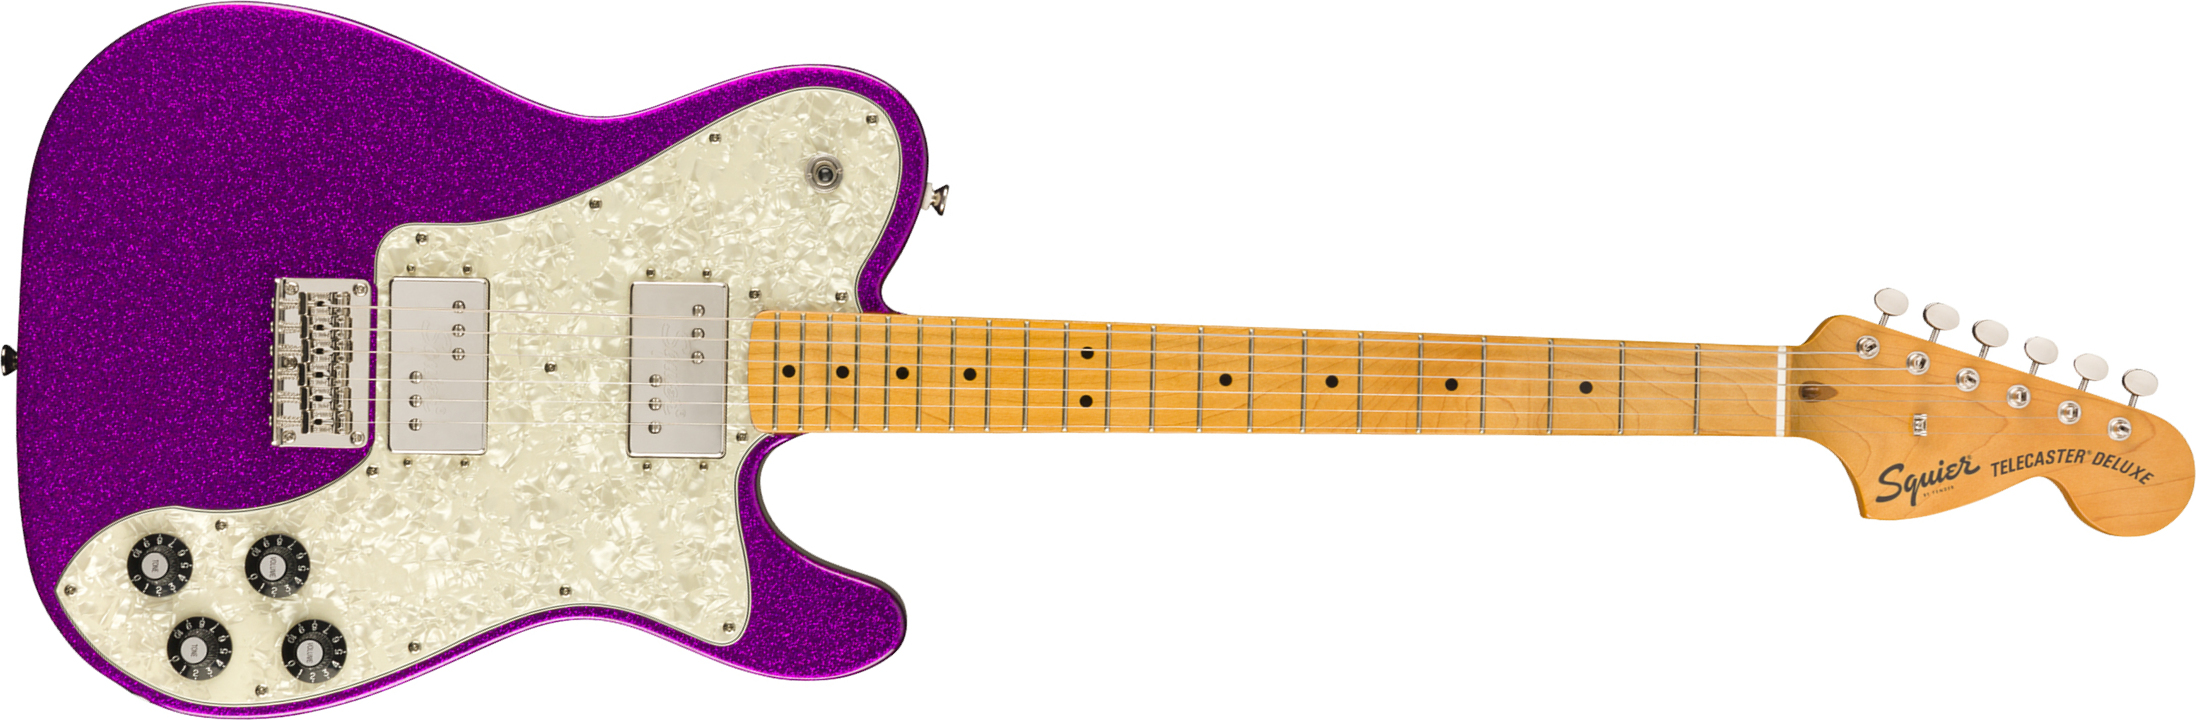 Squier Tele Deluxe Classic Vibe 70 Fsr Ltd 2020 Hh Htmn - Purple Sparkle - Guitarra eléctrica con forma de tel - Main picture